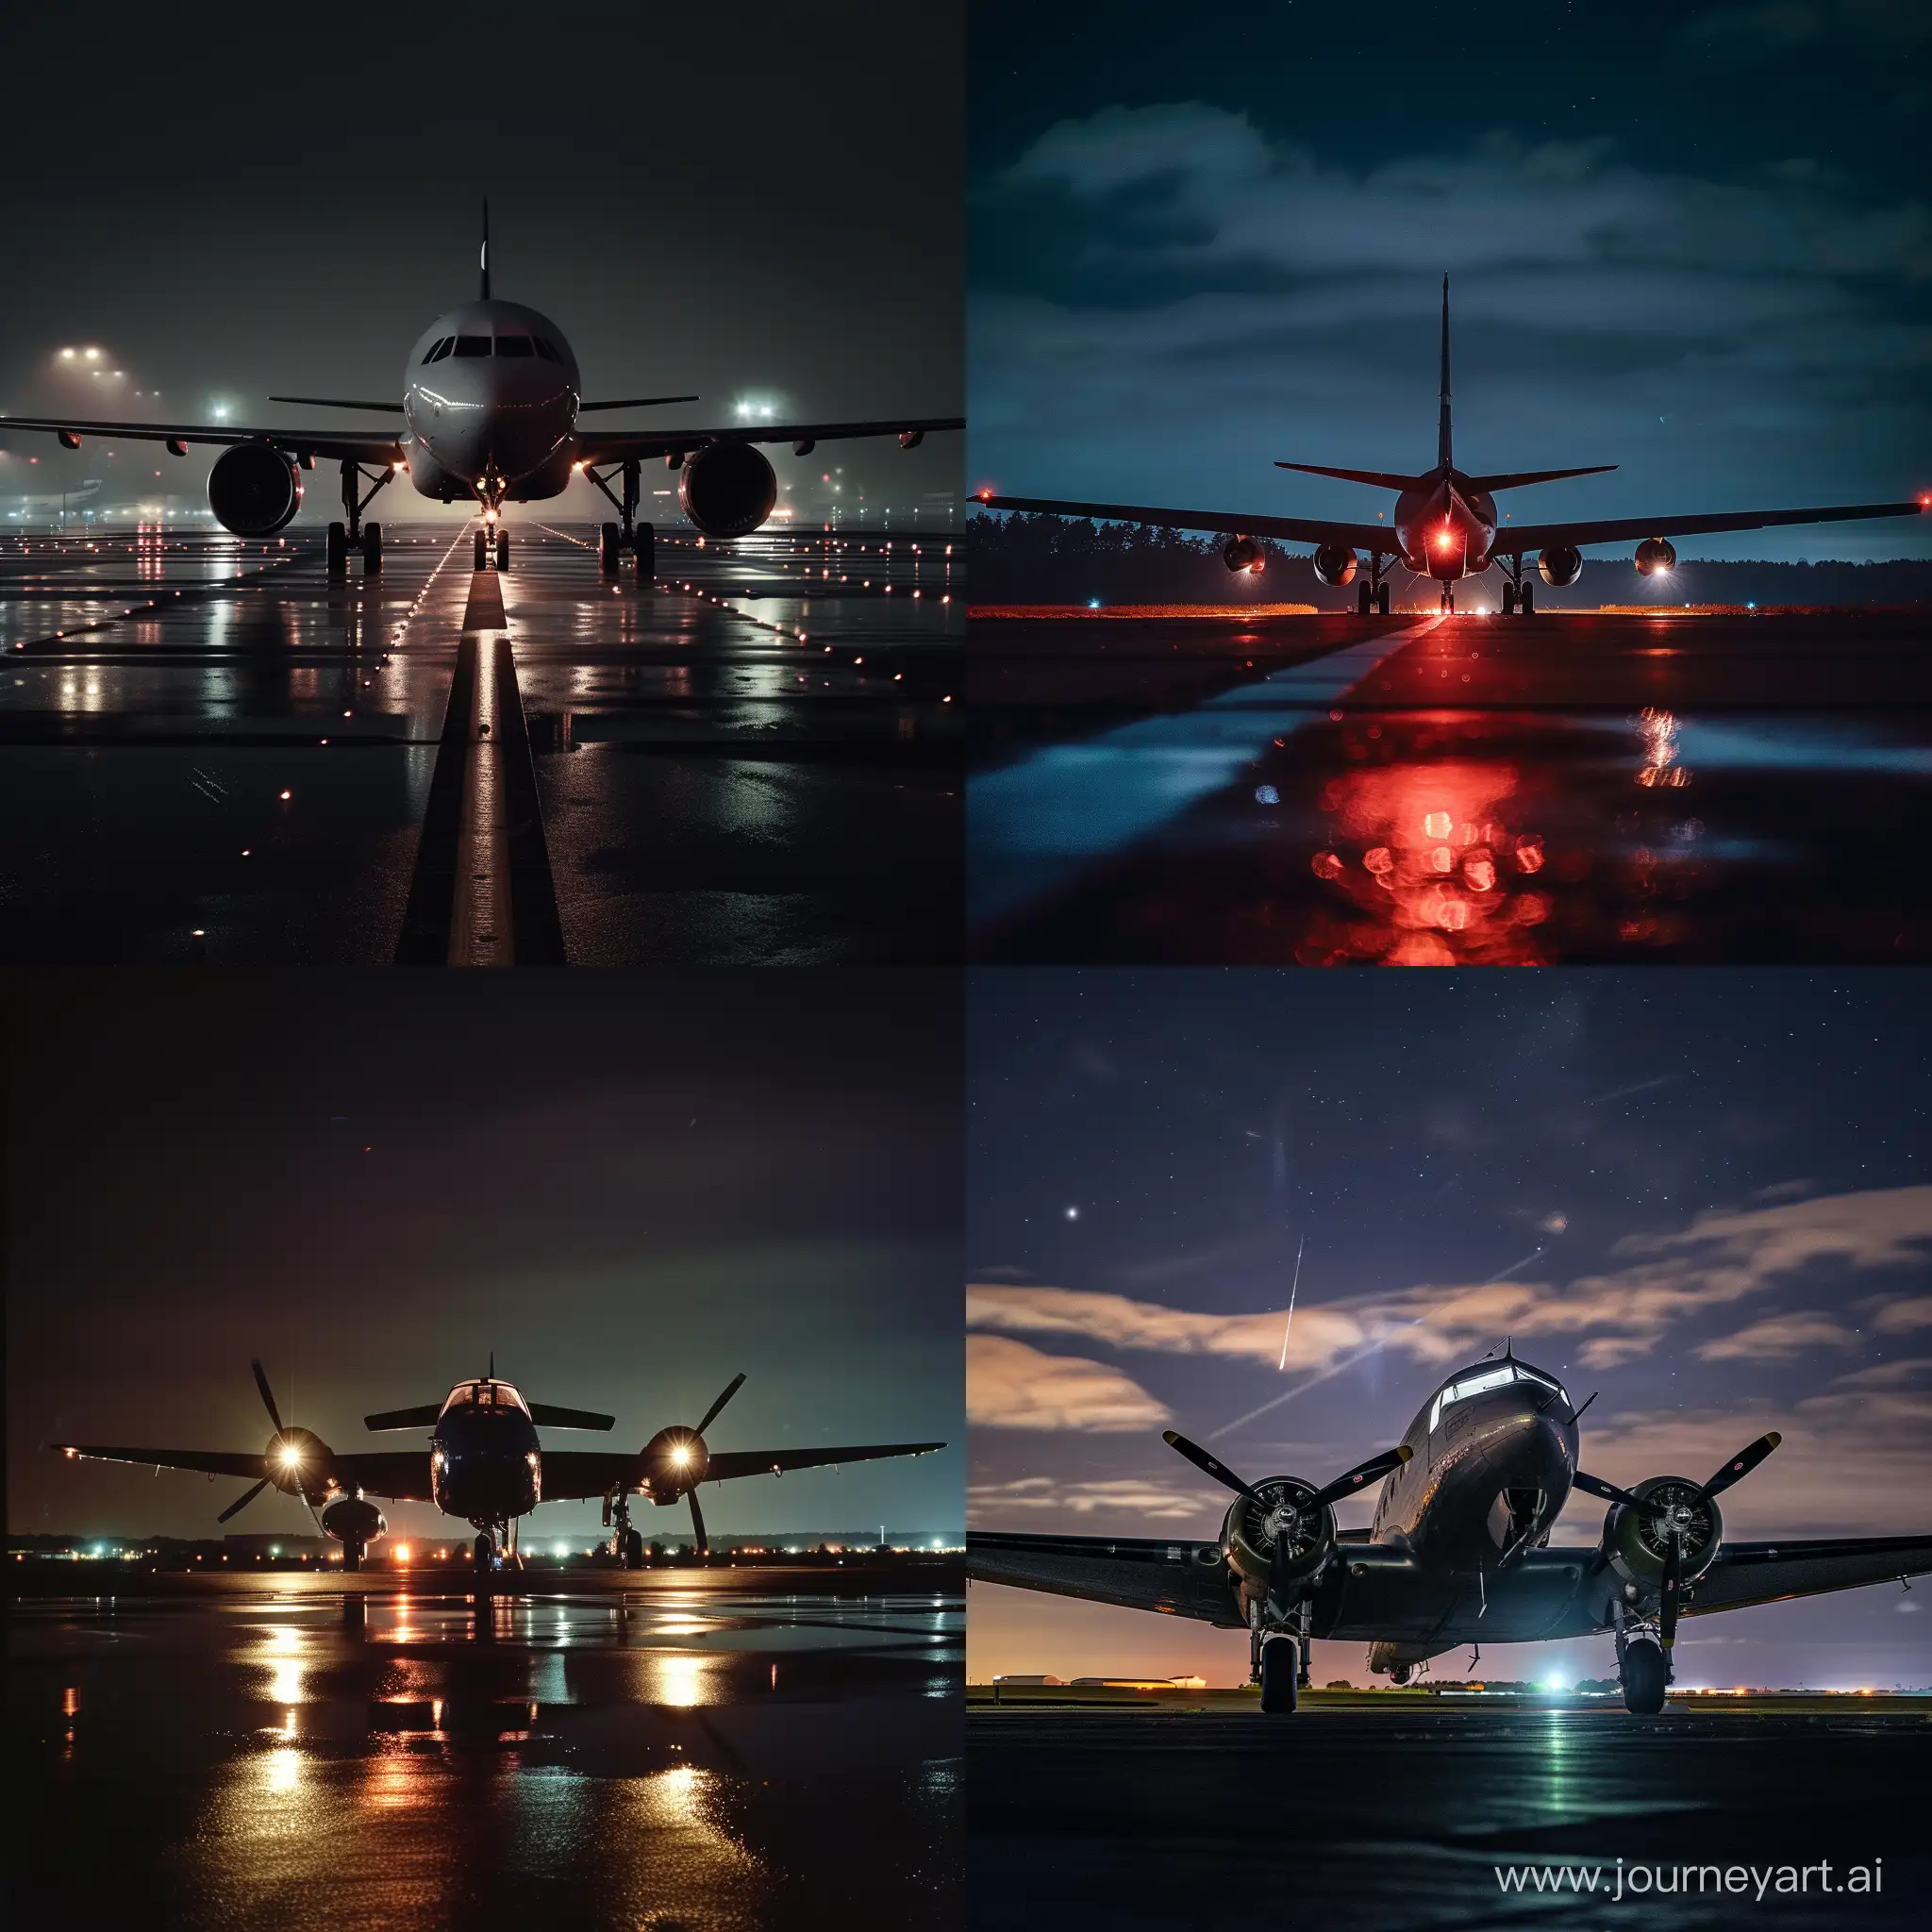 Aircraft-Night-Scene-with-Illuminated-City-Lights